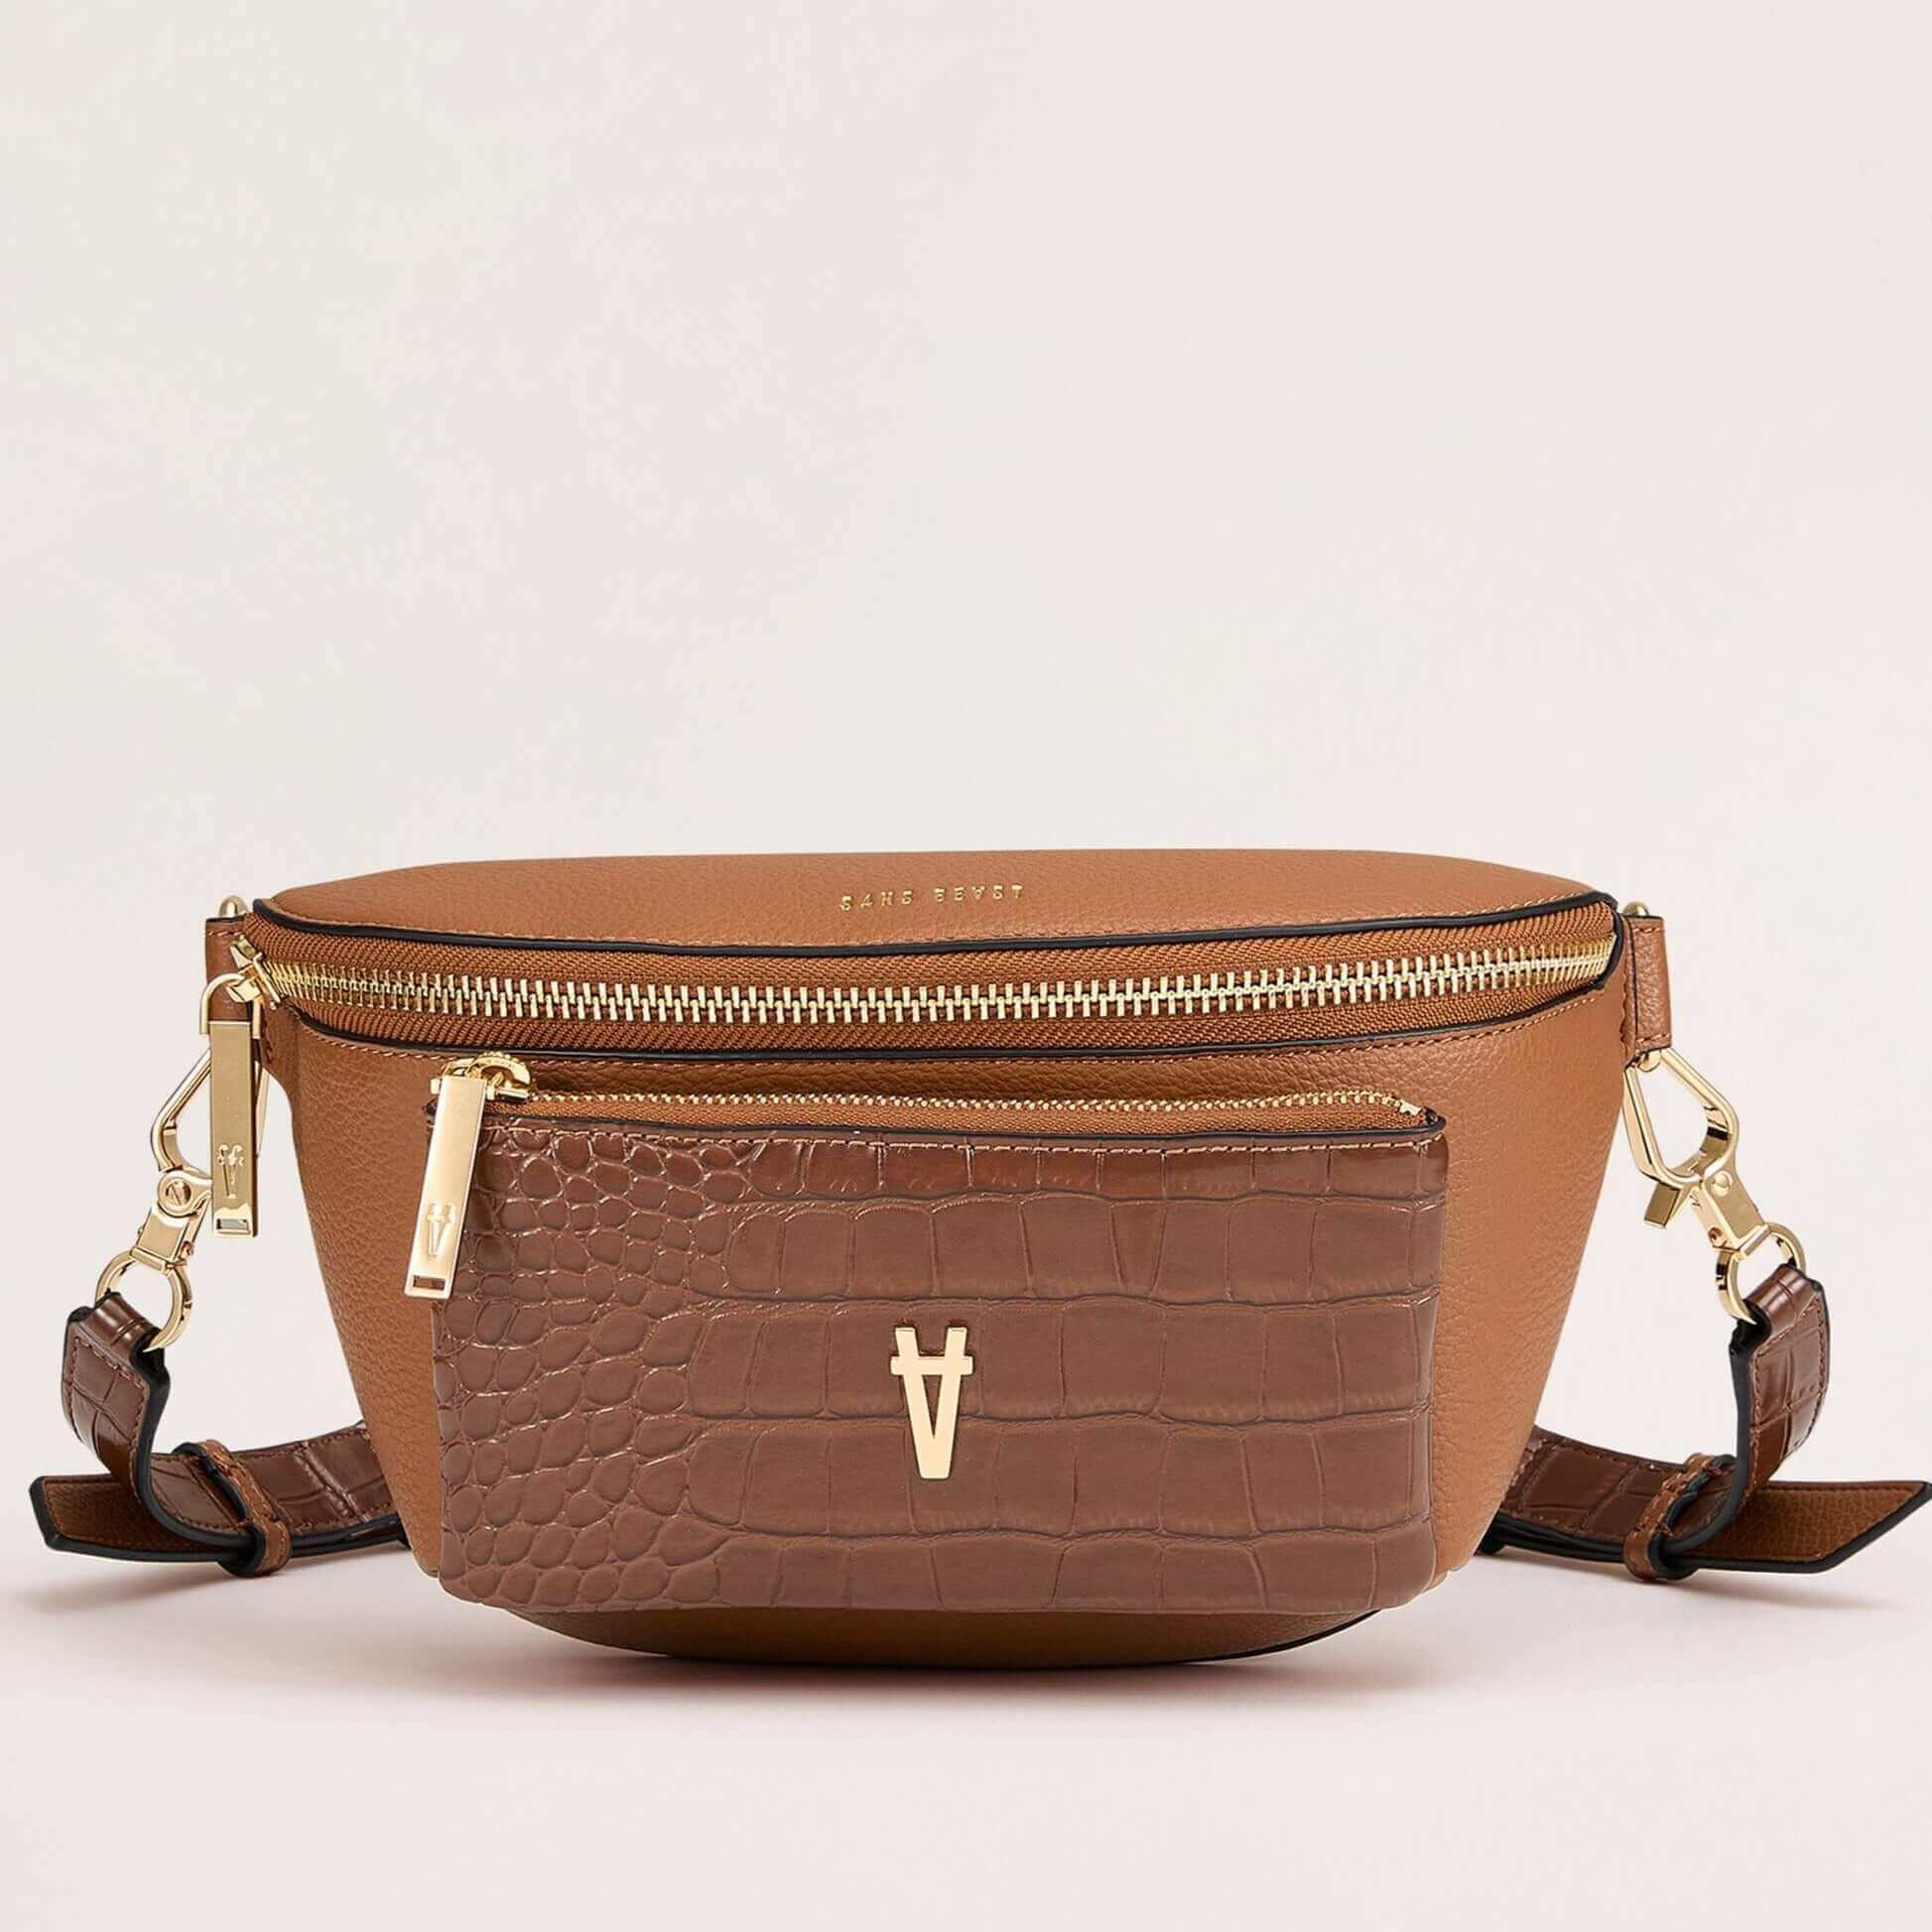 Hidesign Ee Maple 03 Brown Leather Women Shoulder Bag: Buy